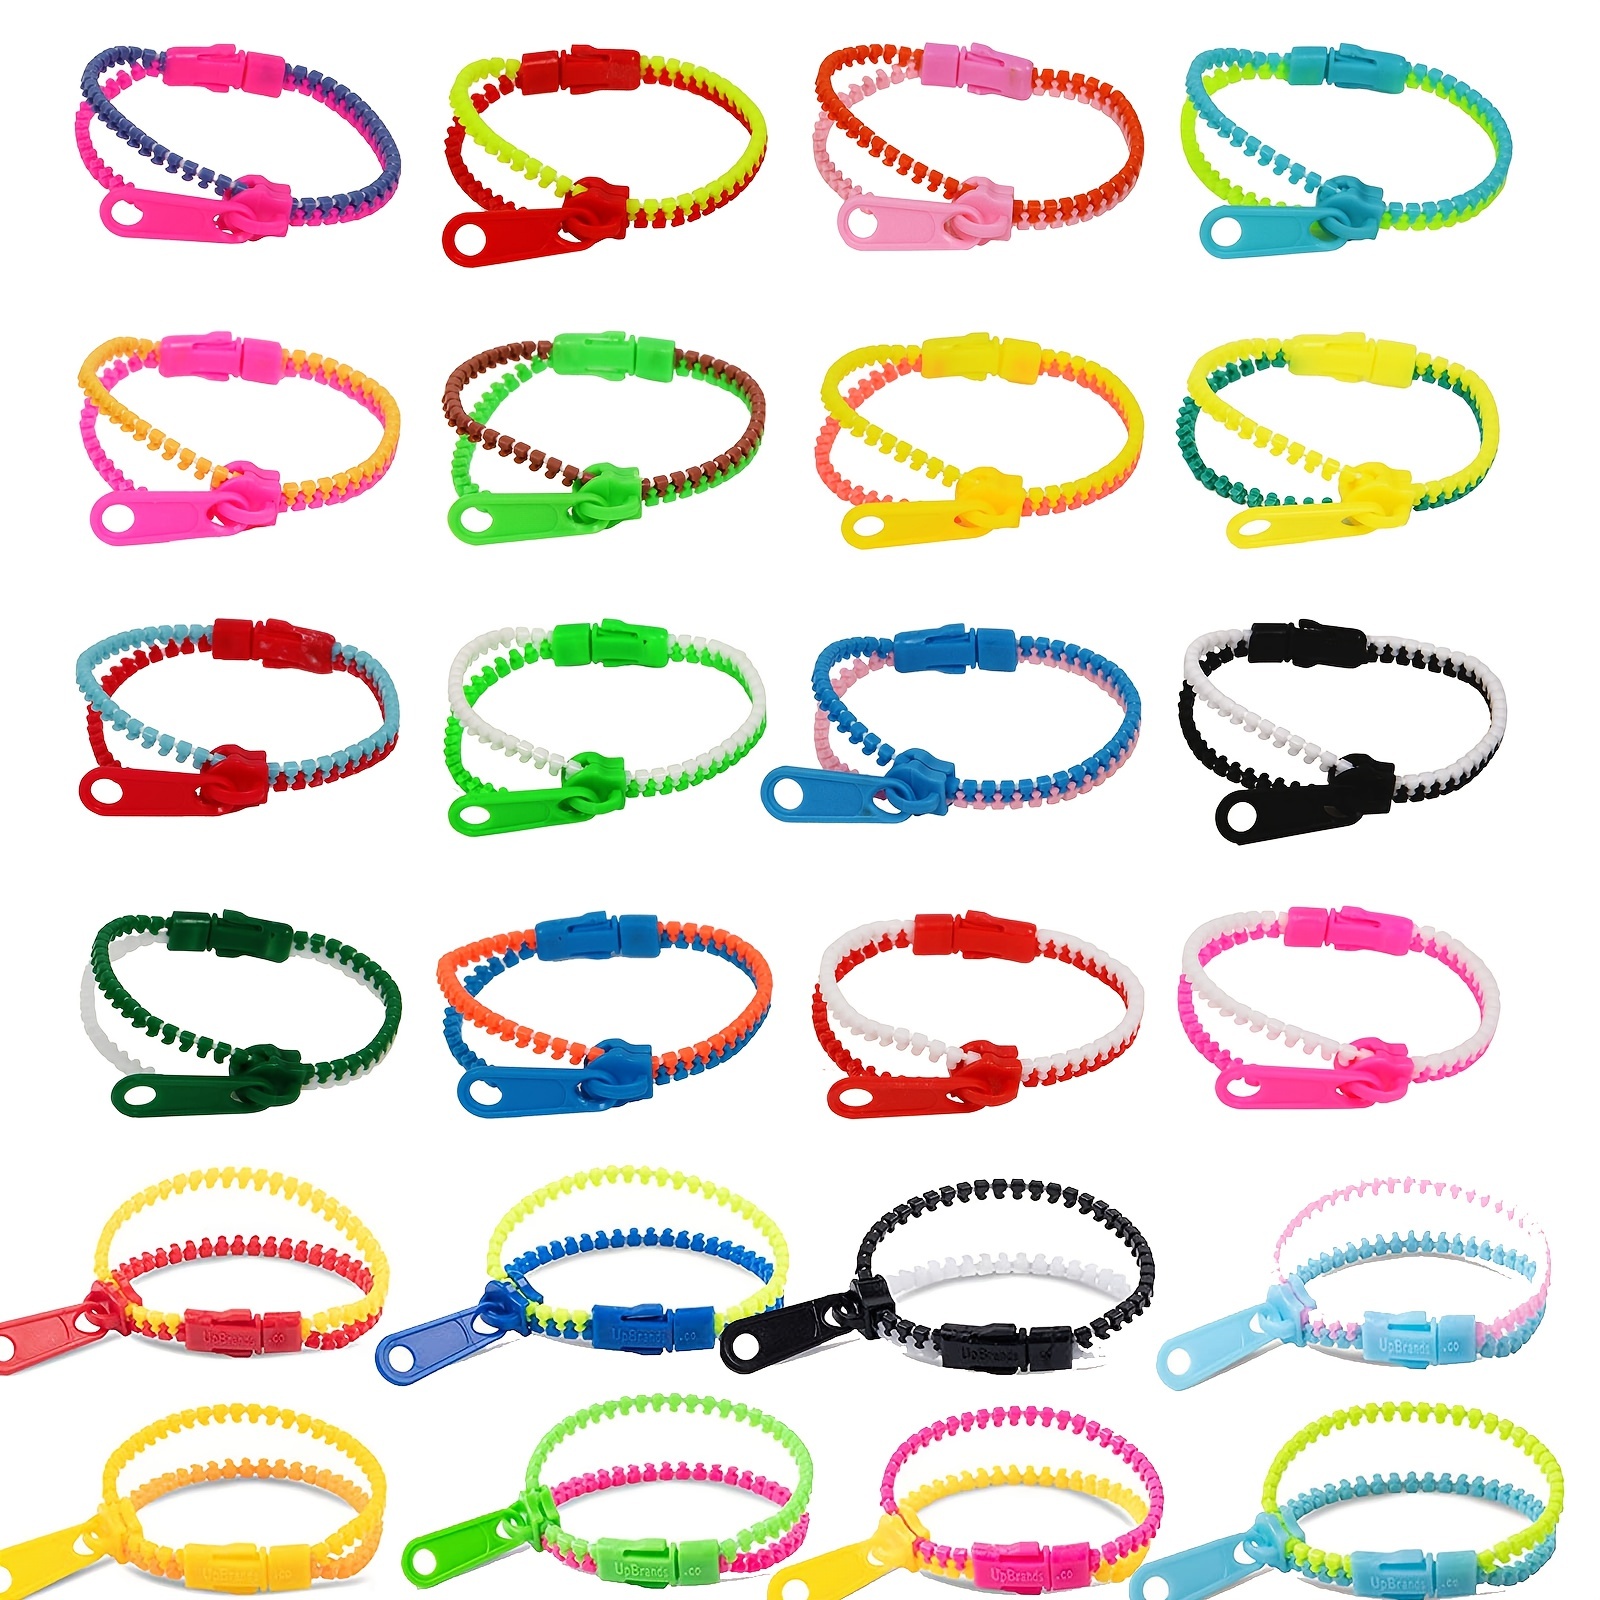 Studico Zip-Zip Hooray Fidget Bracelets for Kids, Multi-Colored Sensory Toys, Perfect for Kid's Party Favors / 24 Pack